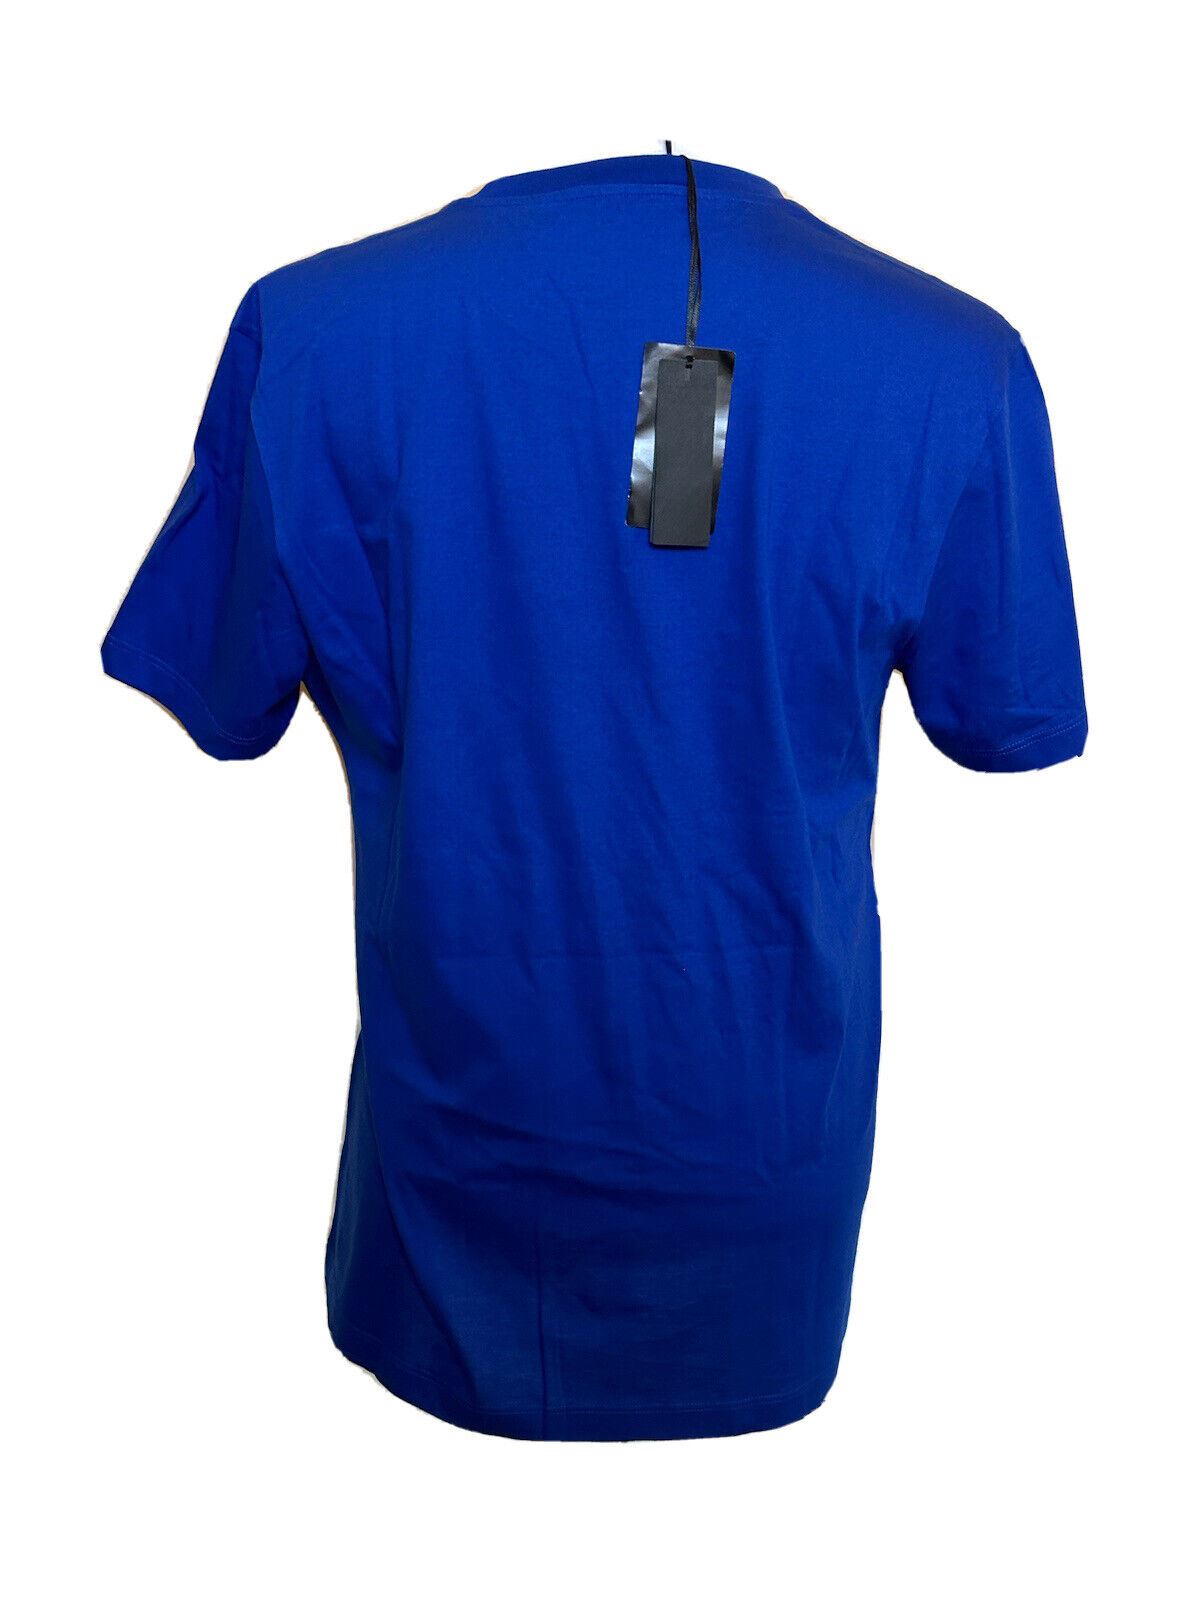 NWT 450 $ Versace Smiley Medusa Logo Blau/Limette Jersey T-Shirt 5XL 1002464